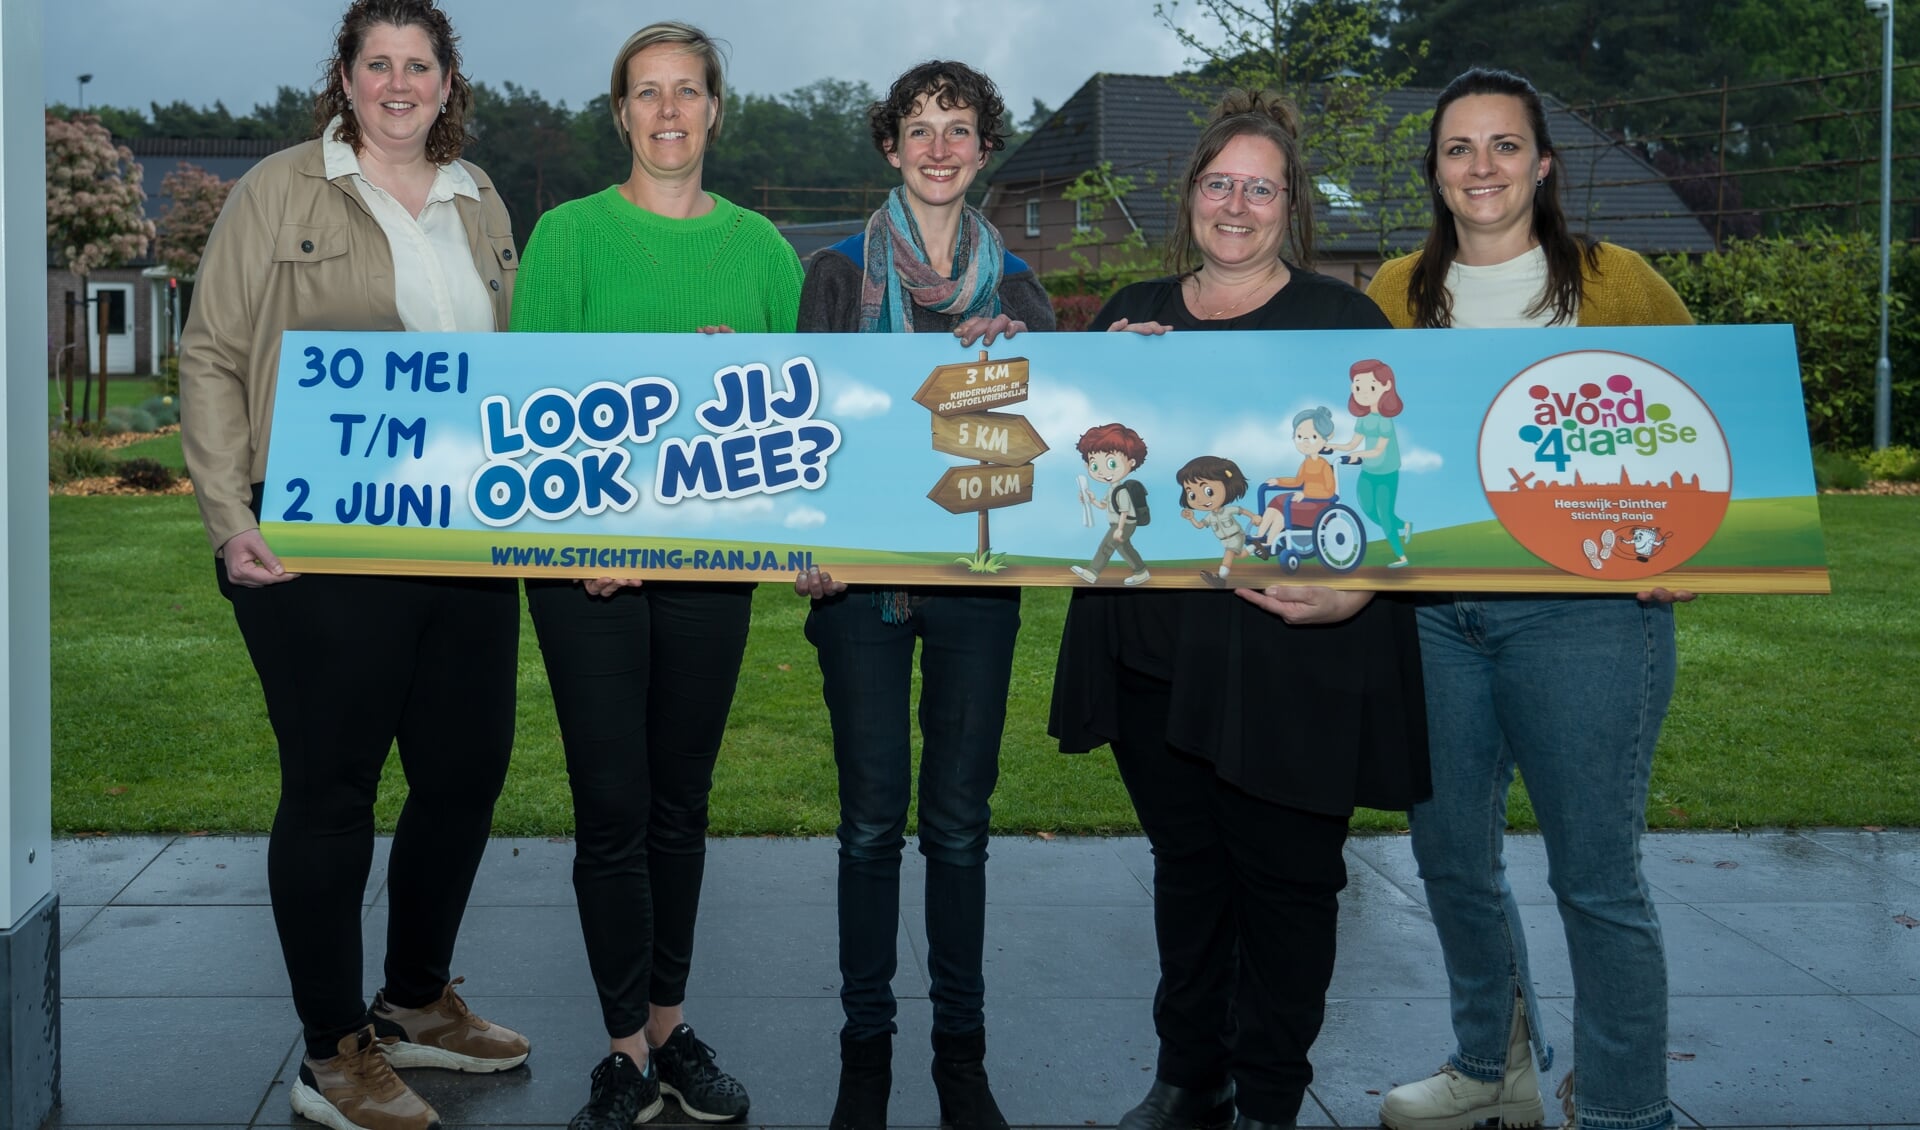 Esther van Helvoort, Martine de Groene, Noortje Krol,Yvette de Mol en Dieuwke van Boxtel